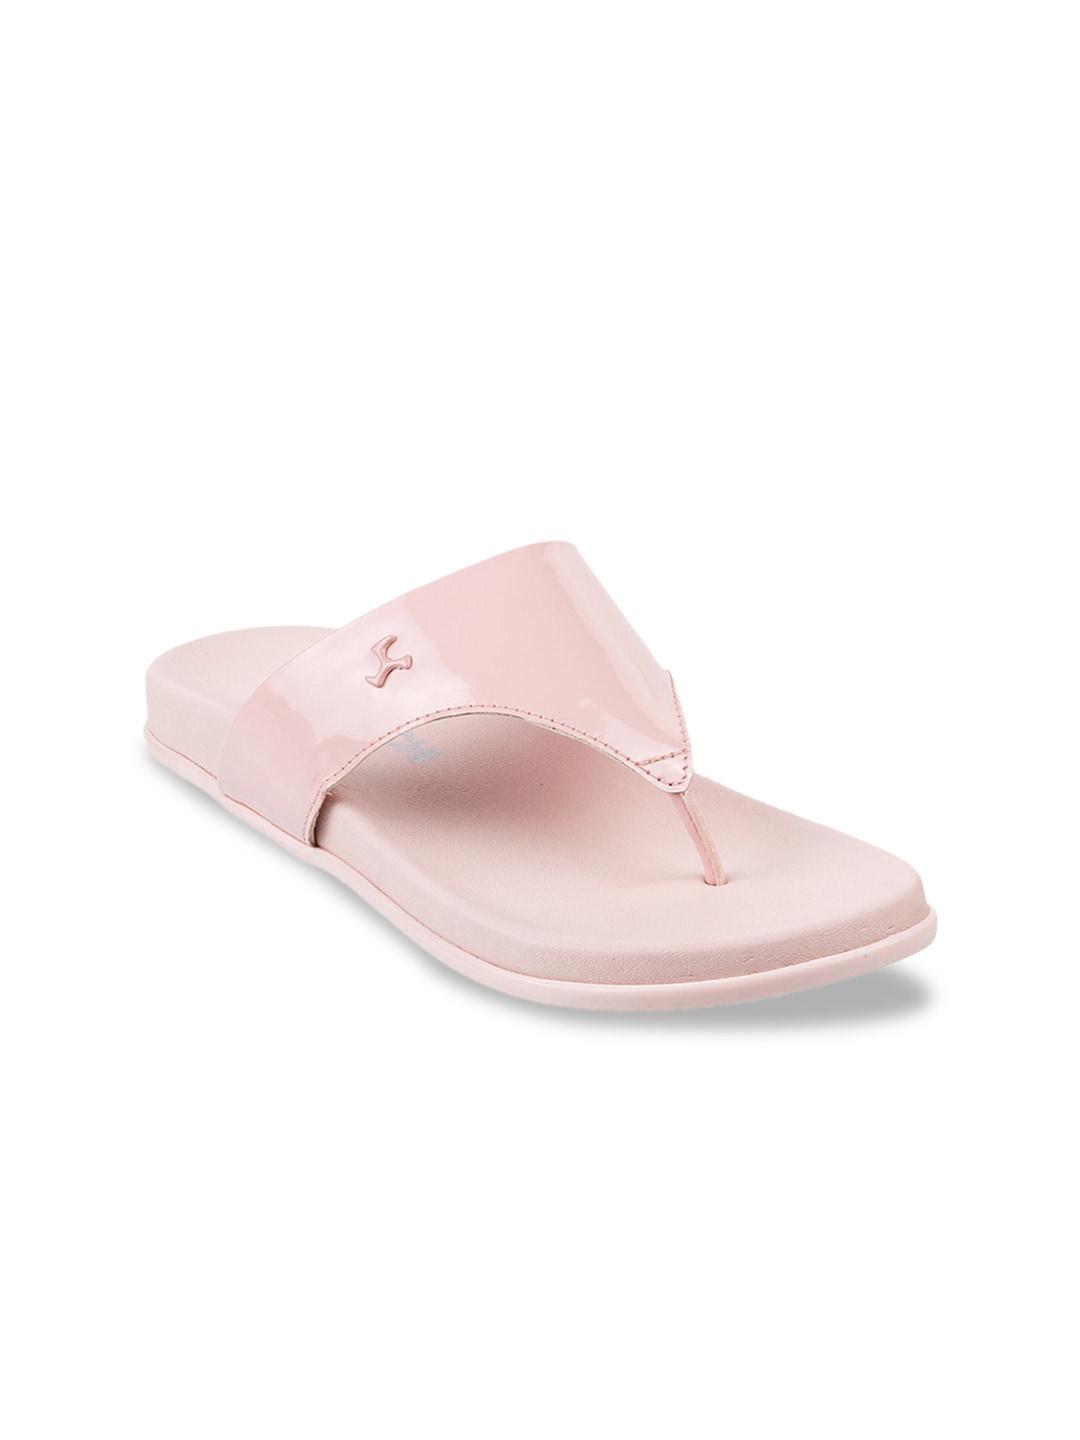 mochi women pink flatform sandals